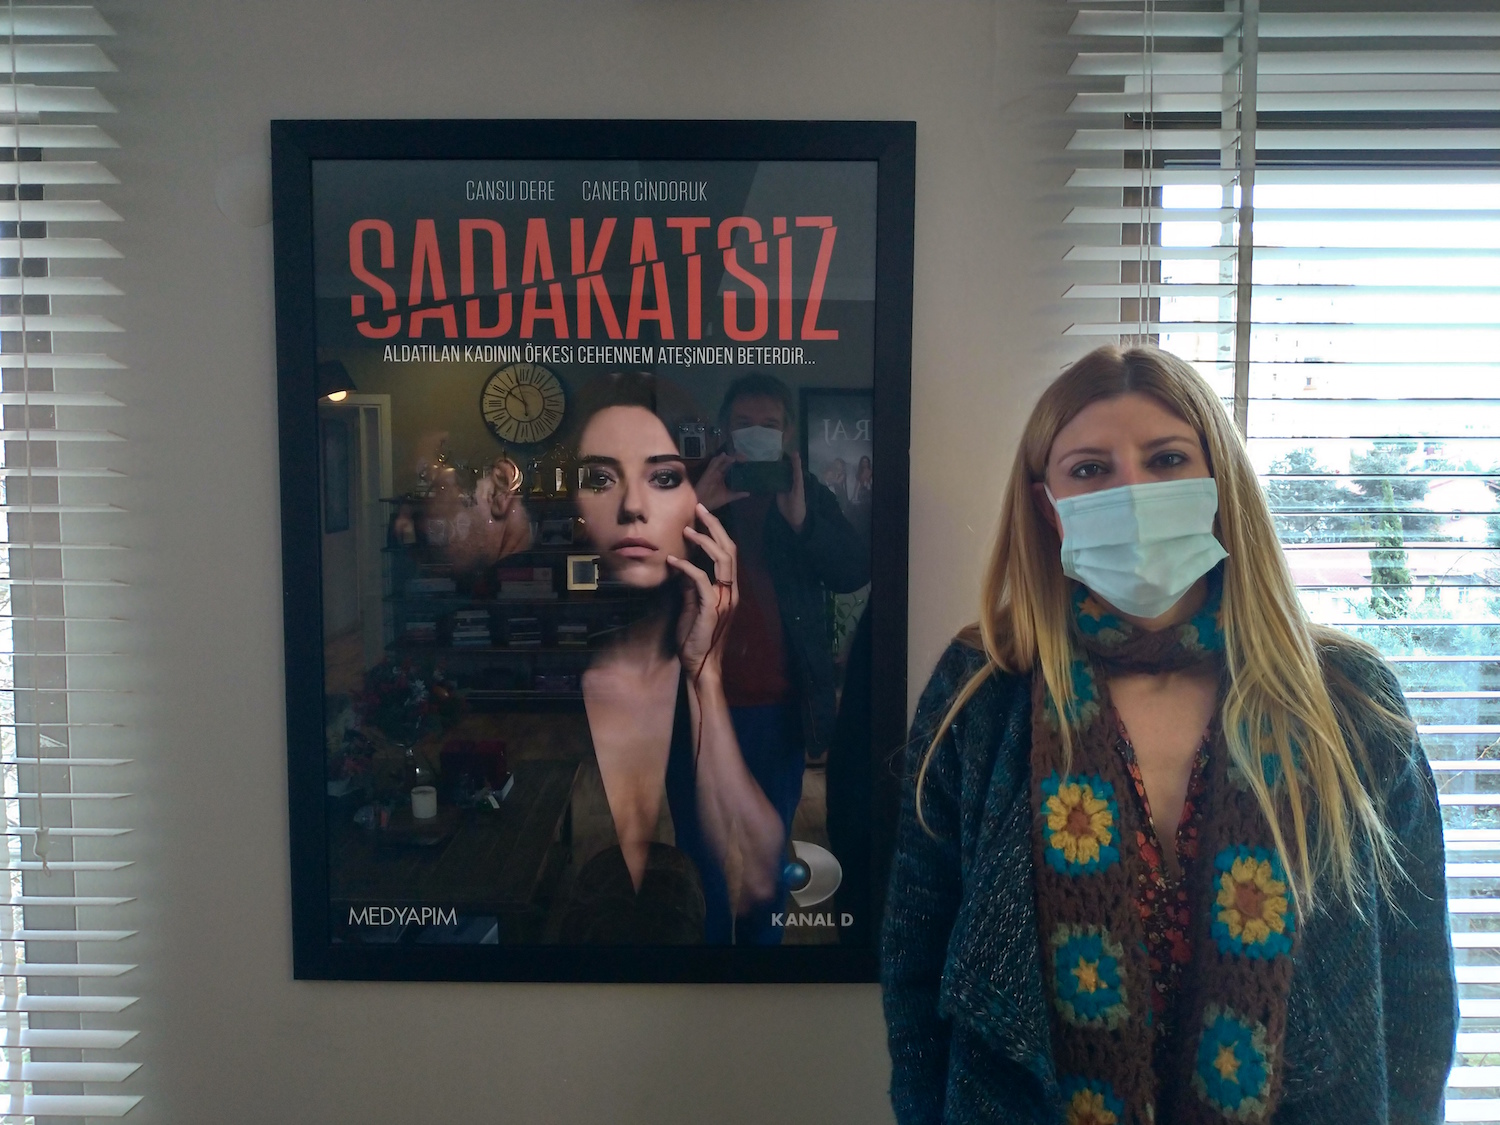 Sadakatsiz, Infidèle en français, la série que produit actuellement Gülümsün ÖZKÖK, adaptée de la série anglaise Doctor Foster. © Globe Reporters